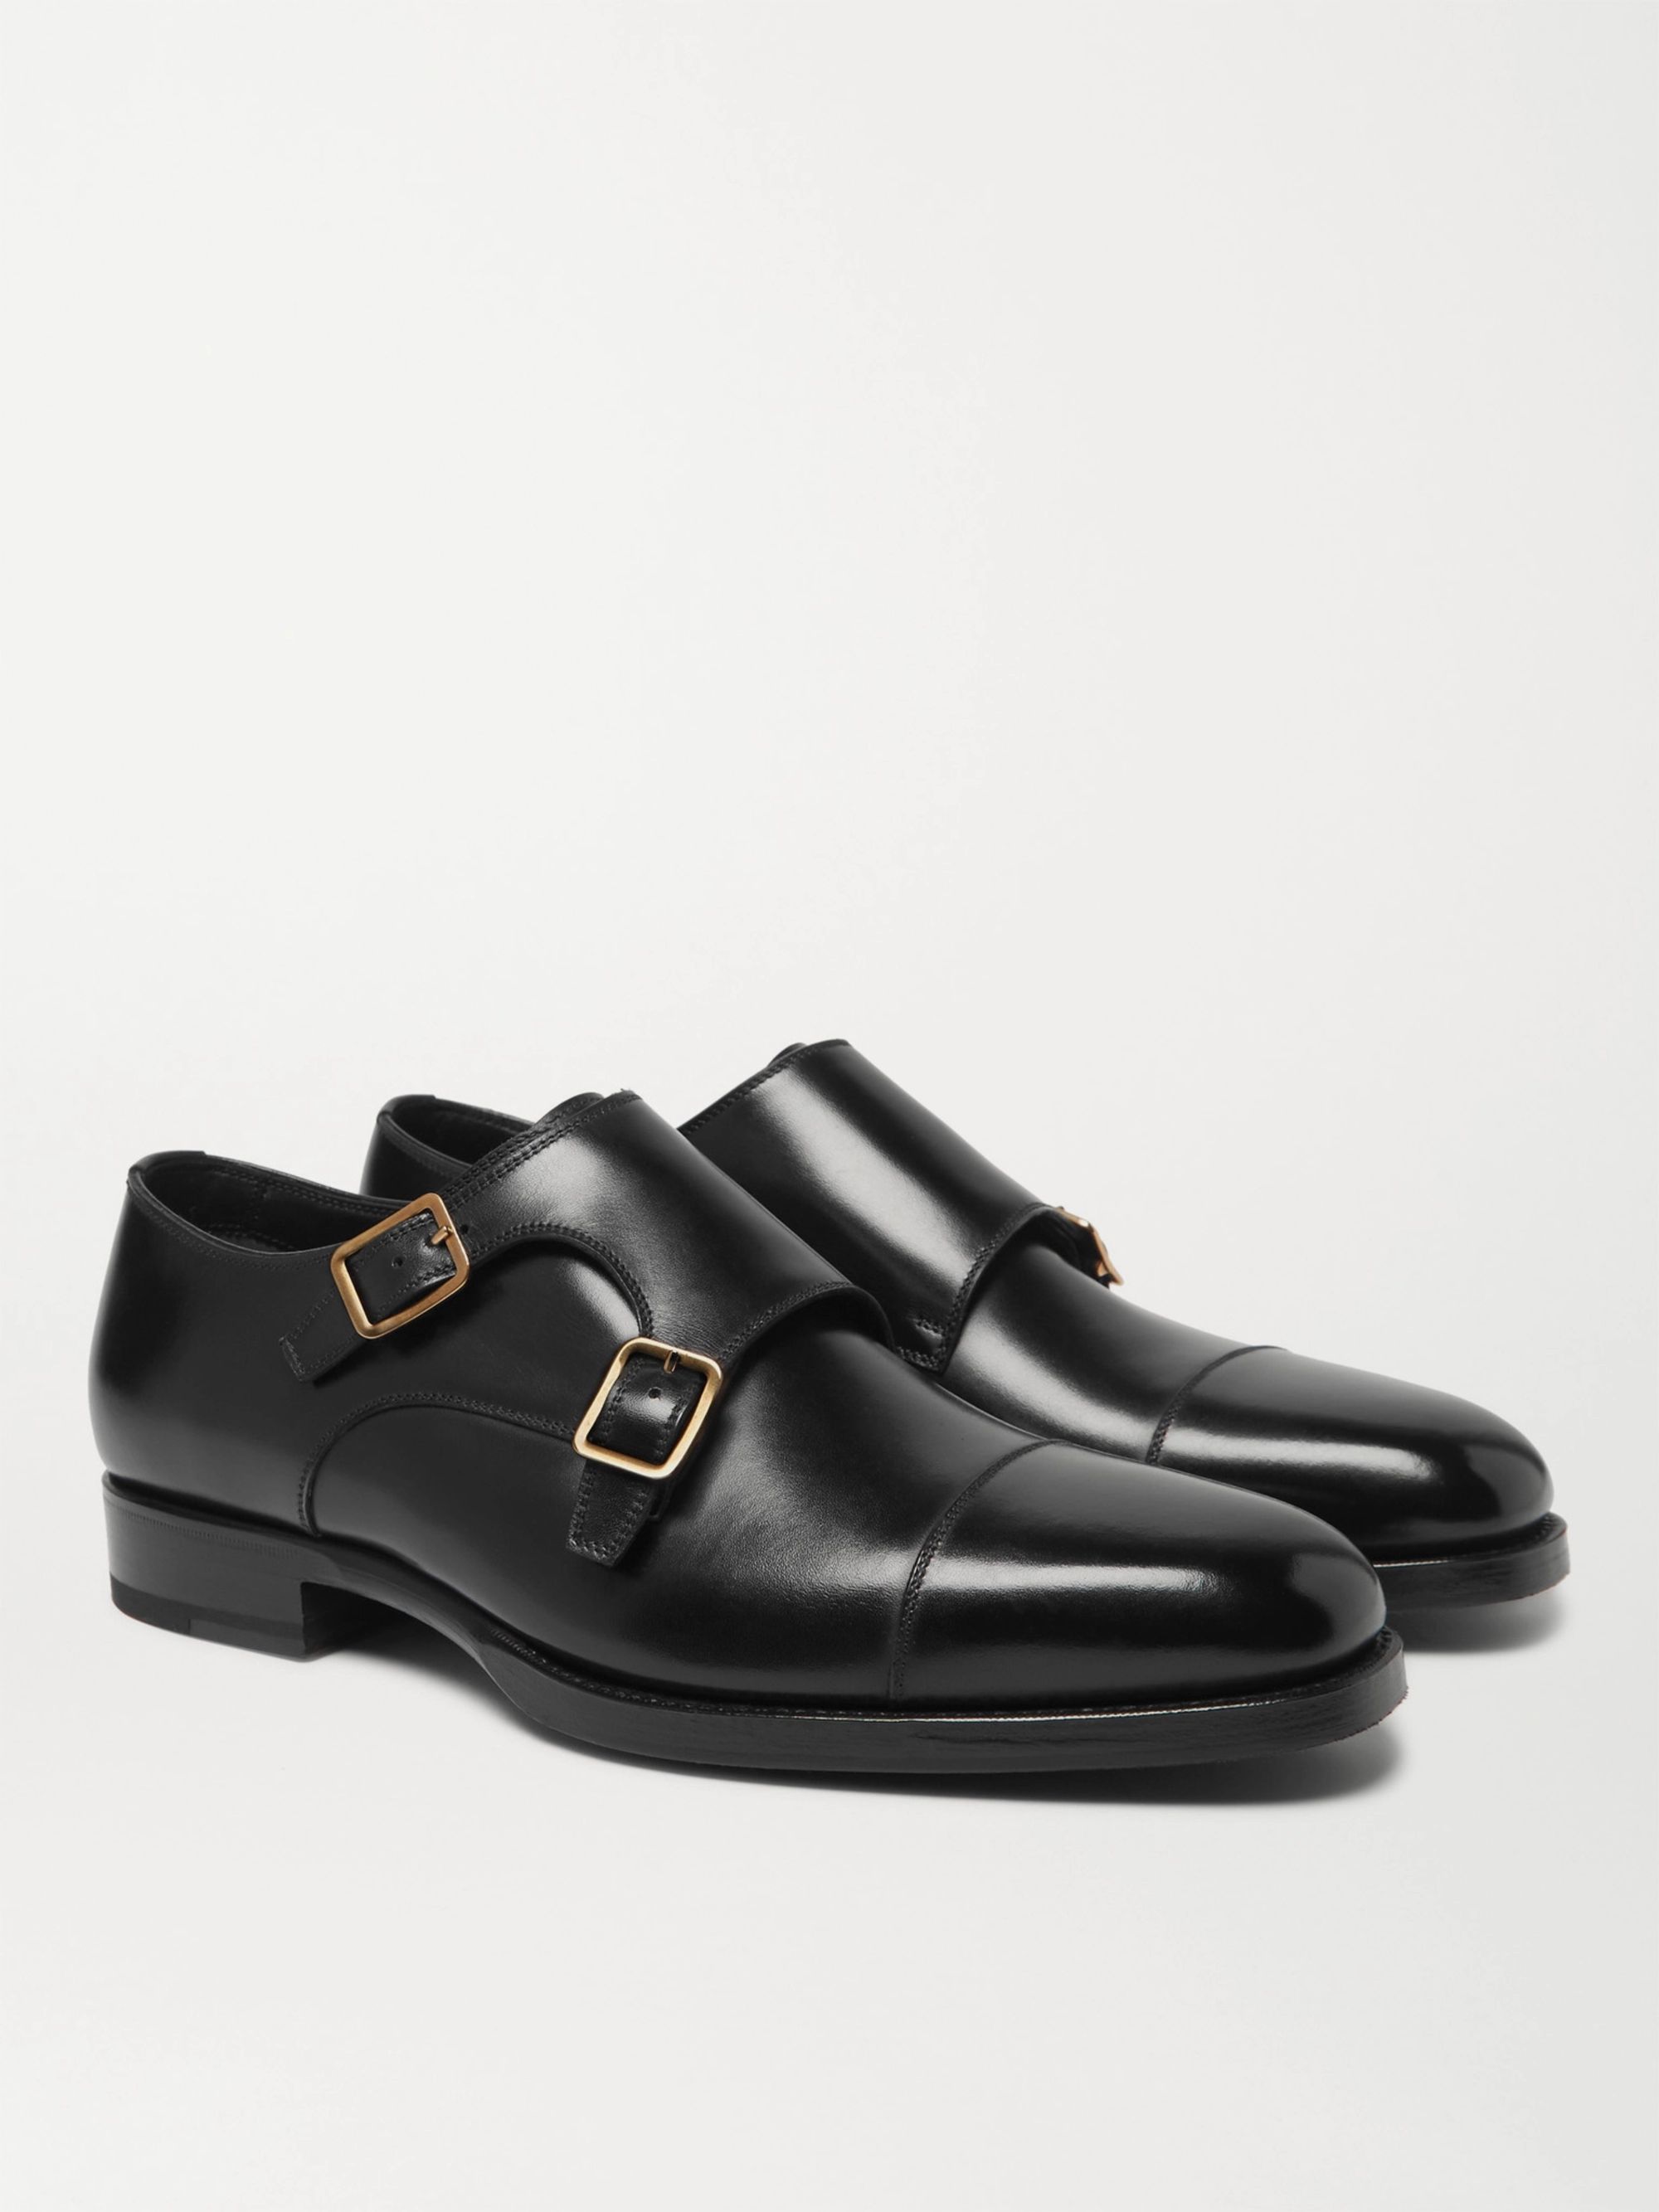 black leather monk strap shoes